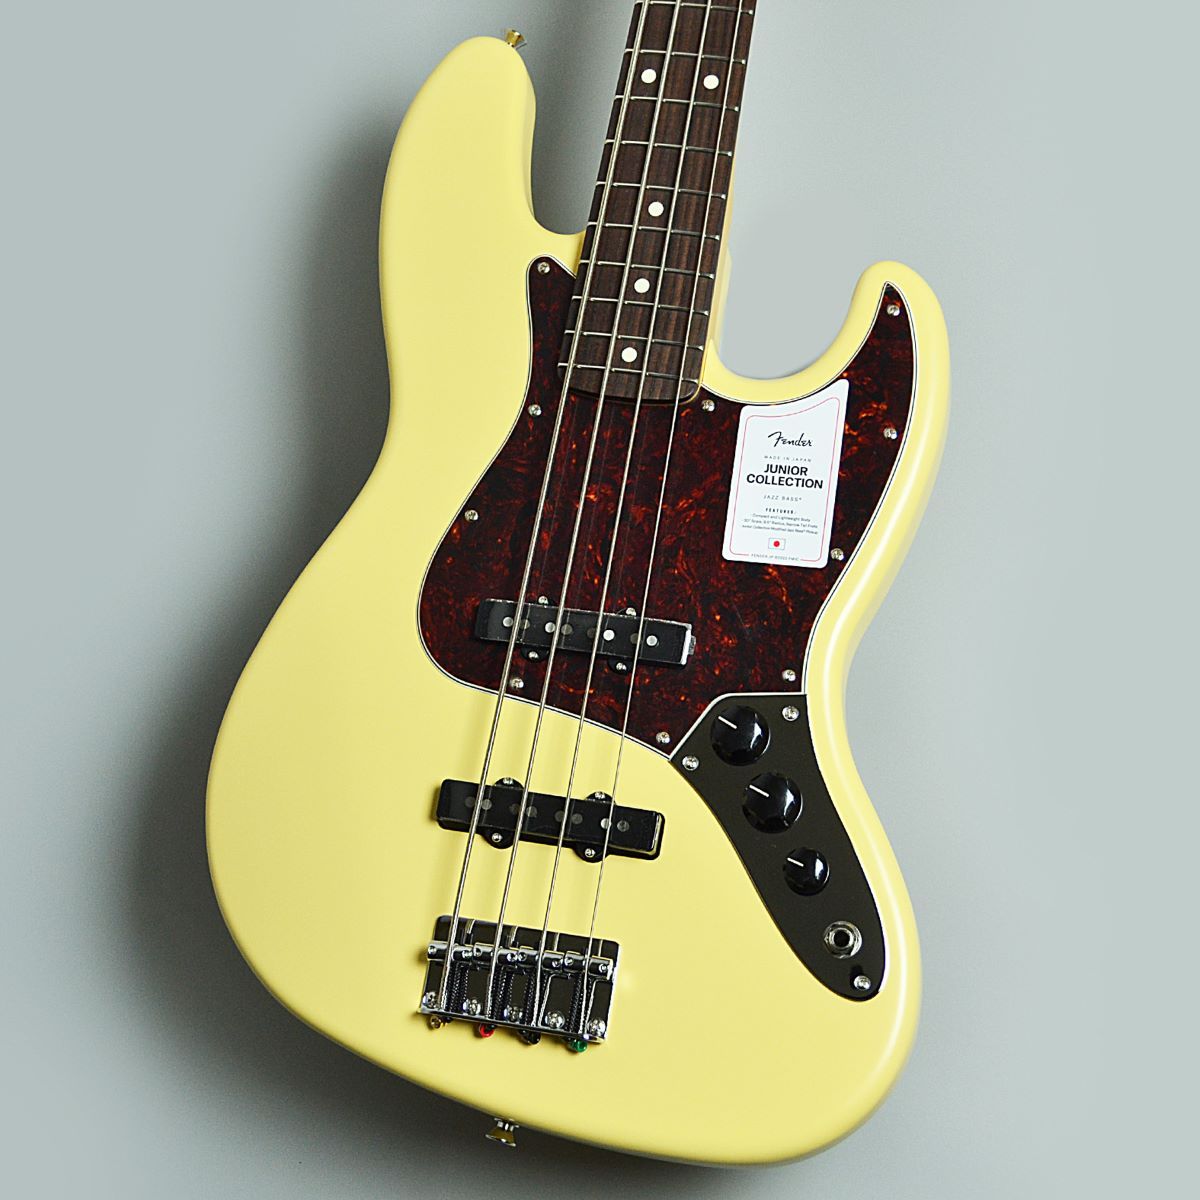 Fender Made in Japan Junior Collection Jazz Bass Satin Vintage